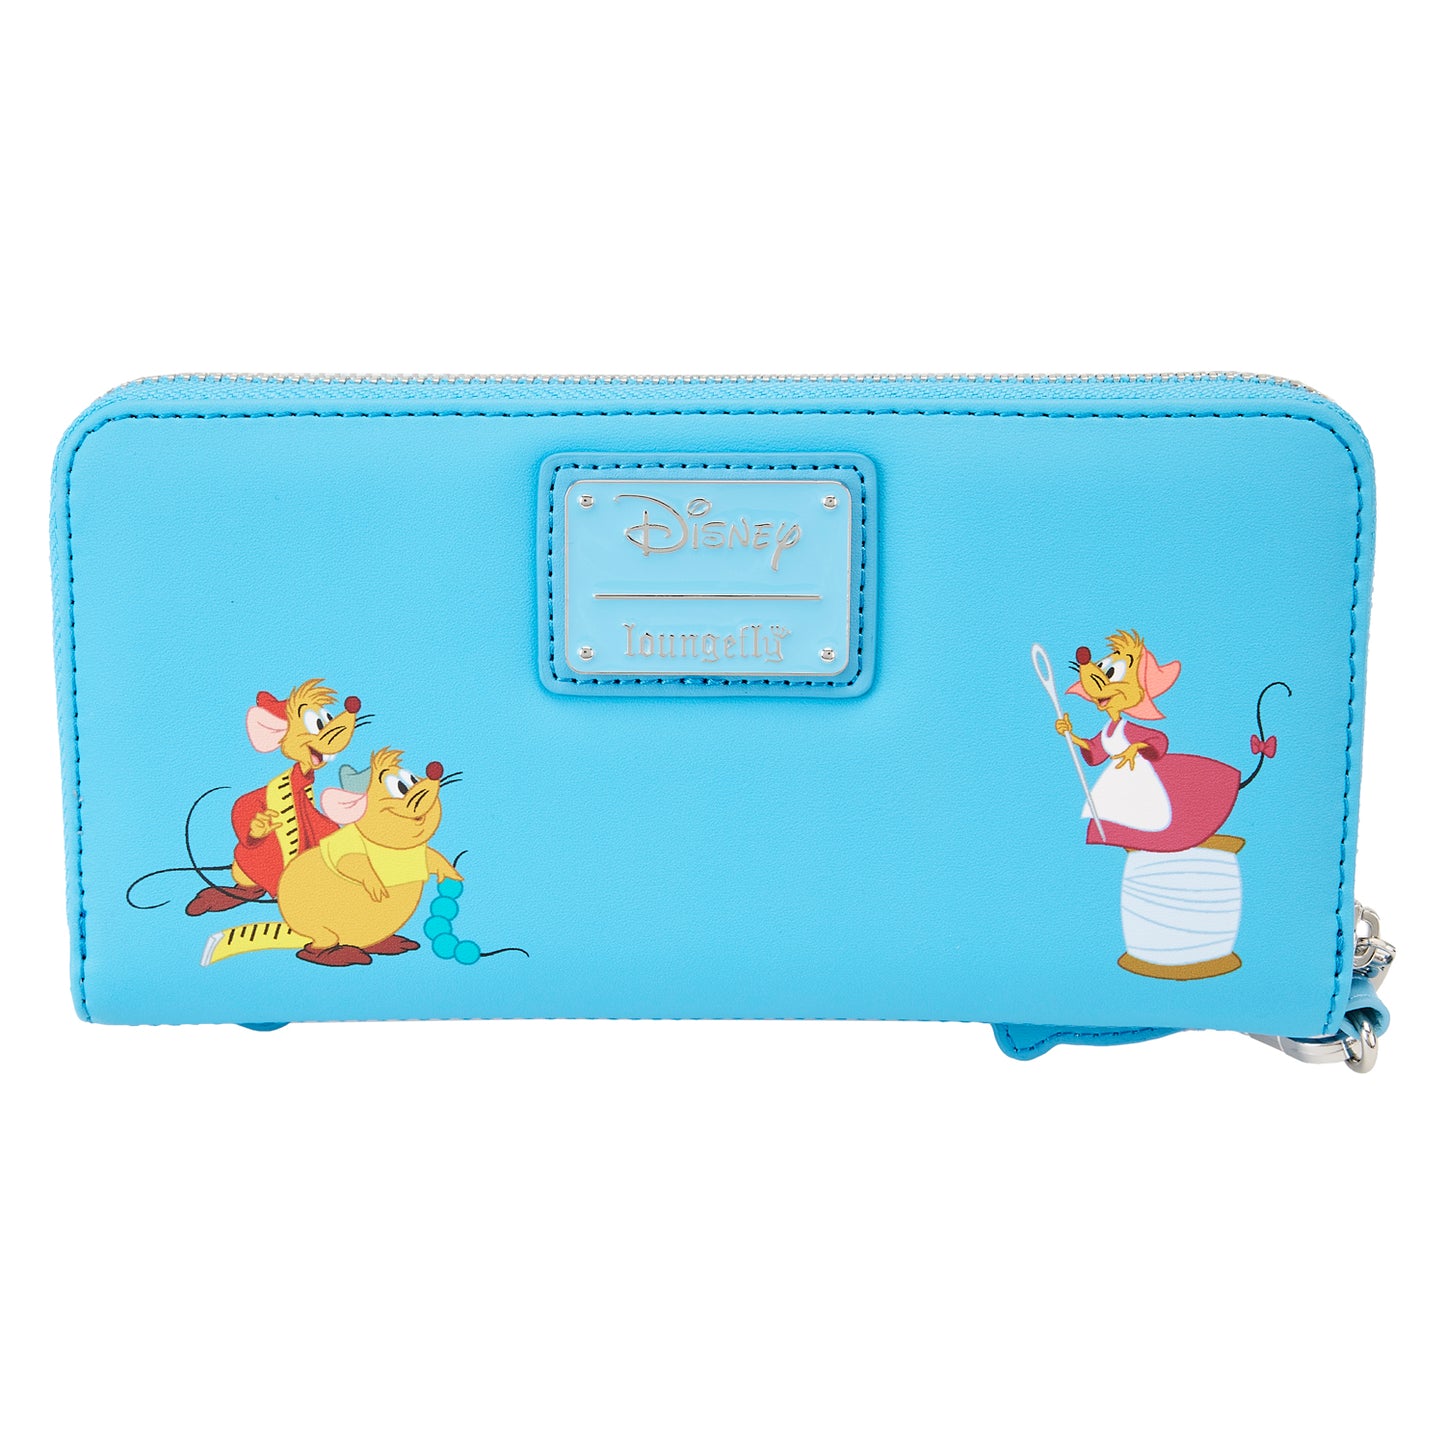 Loungefly Disney Princess Lenticular Series Zip-Around Wallet